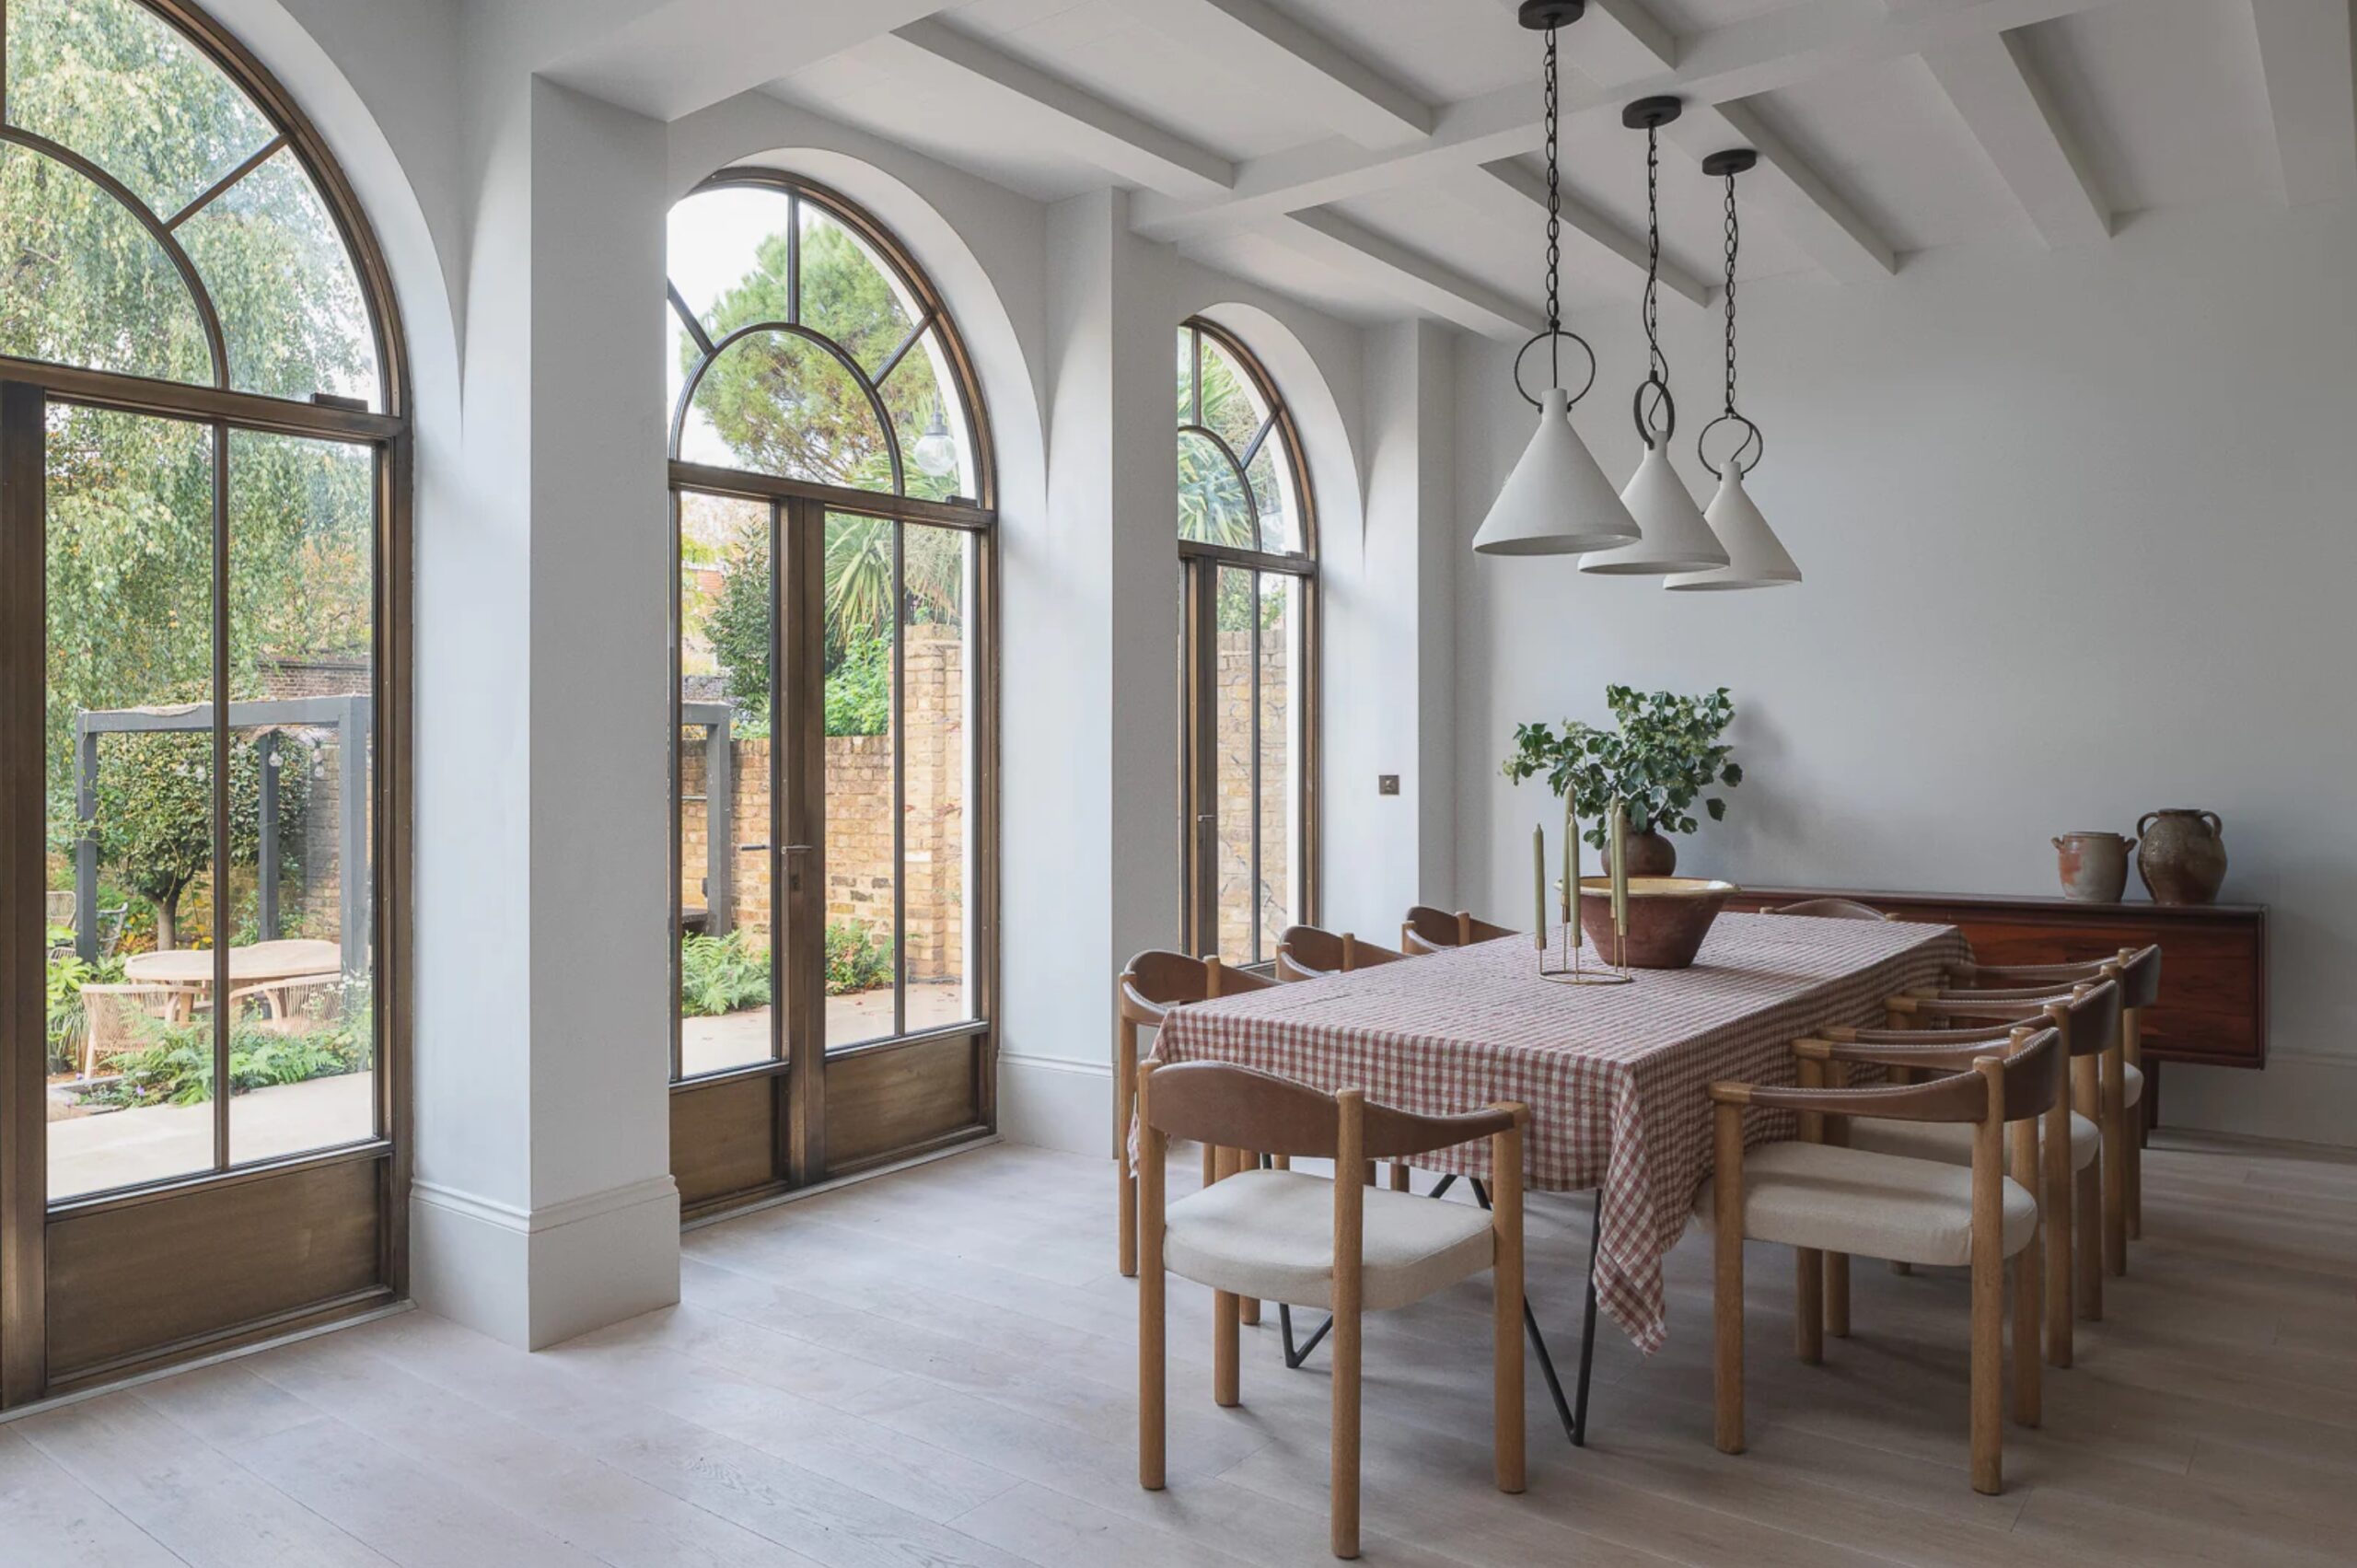 All-the-arches-Housenine-Interior-Design-Jojo-Bar-9